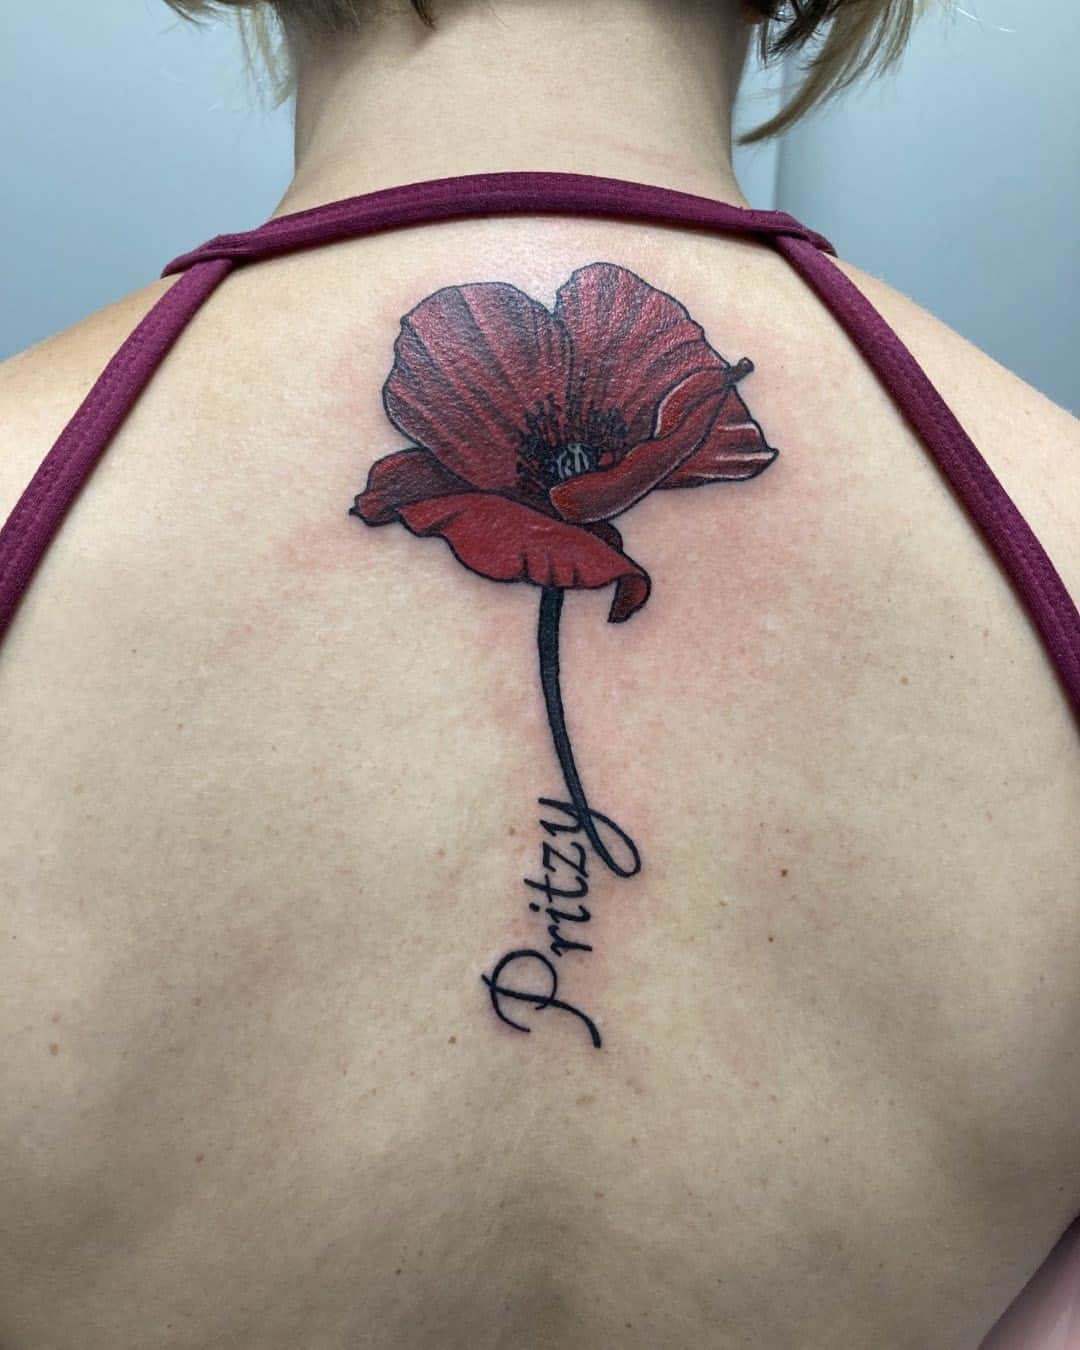 Tatuaje de flor de amapola roja oscura en la espalda